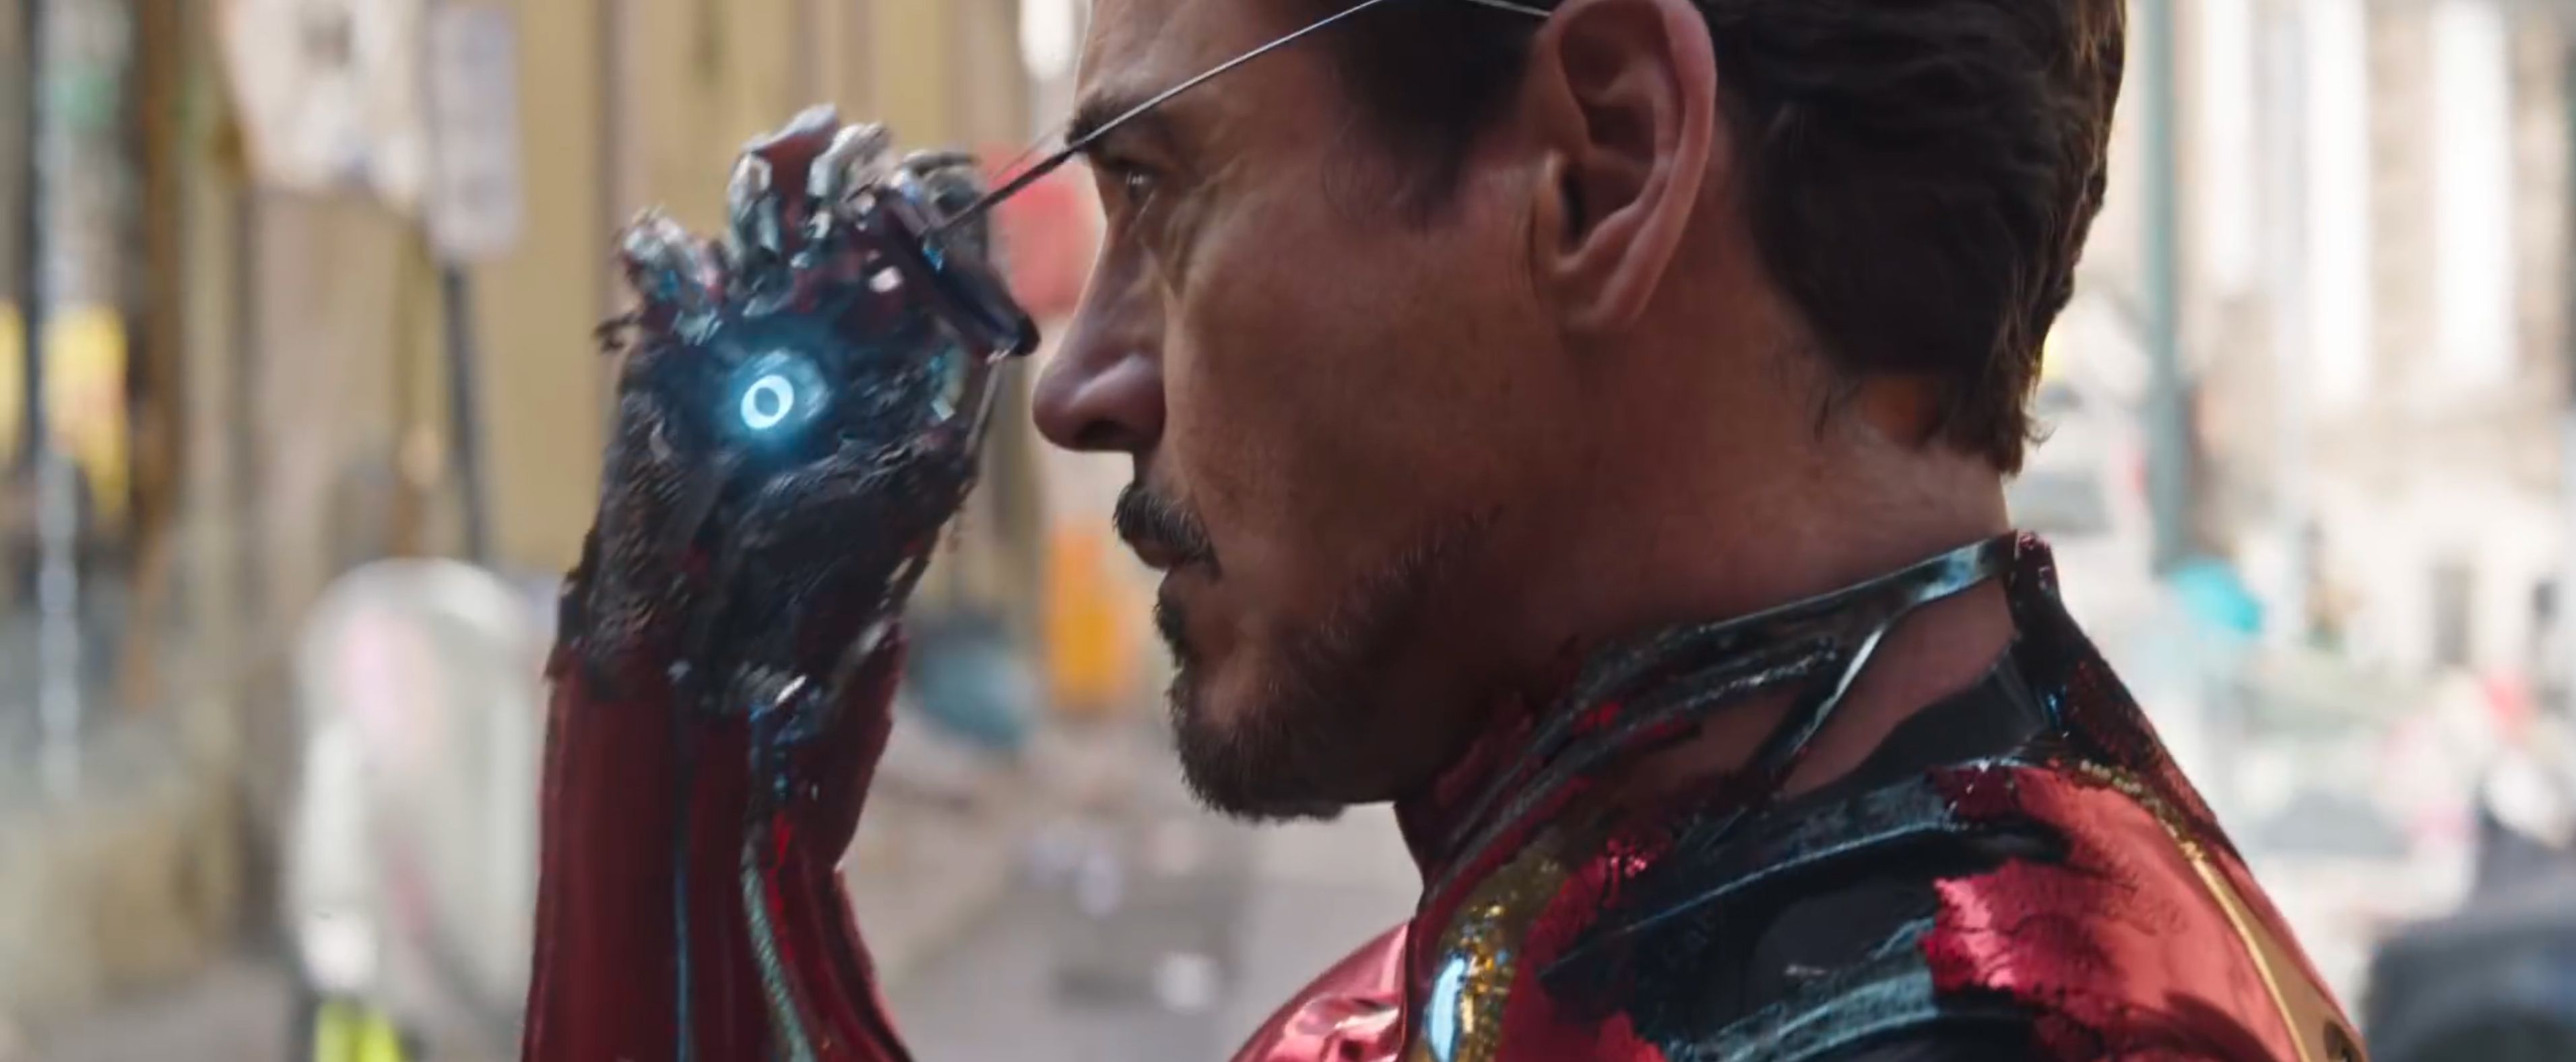 Avengers Infinity War Super Bowl Trailer 19